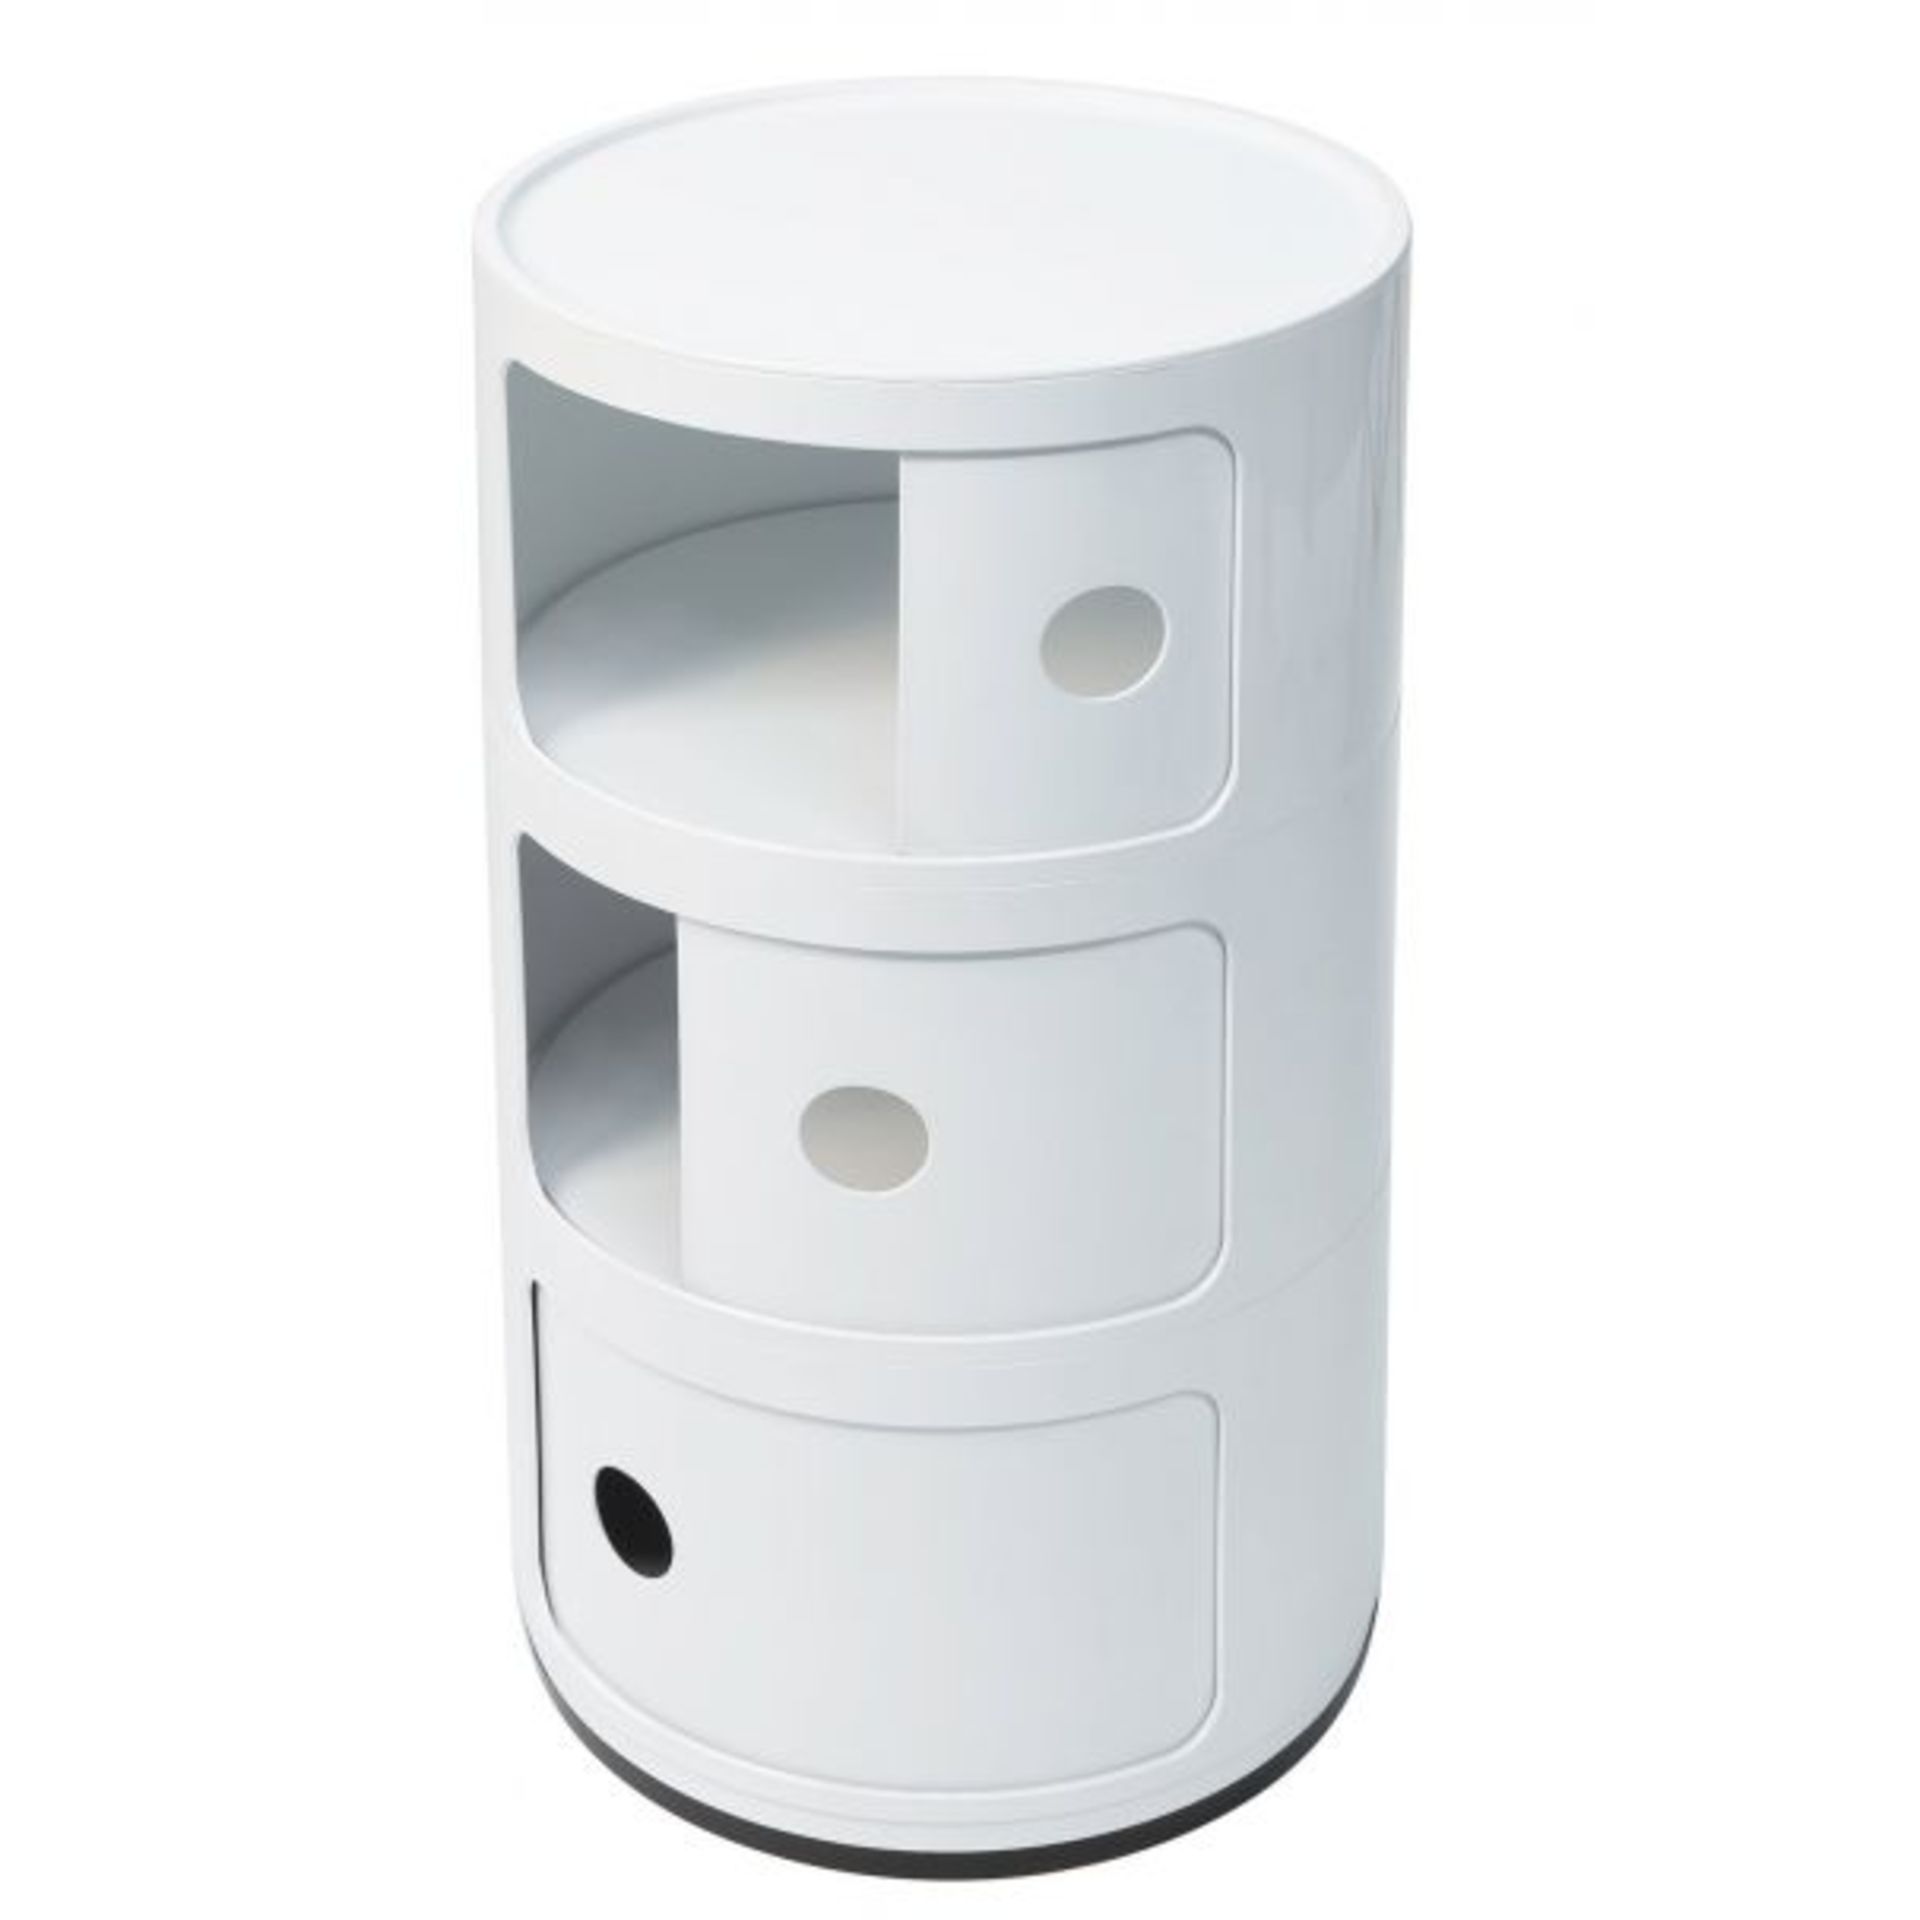 1 x 3 Tier Componibili Storage Unit White - Dimensions: 32(w) x 32(d) x 60(h) cm - Brand New Boxed S - Image 4 of 6